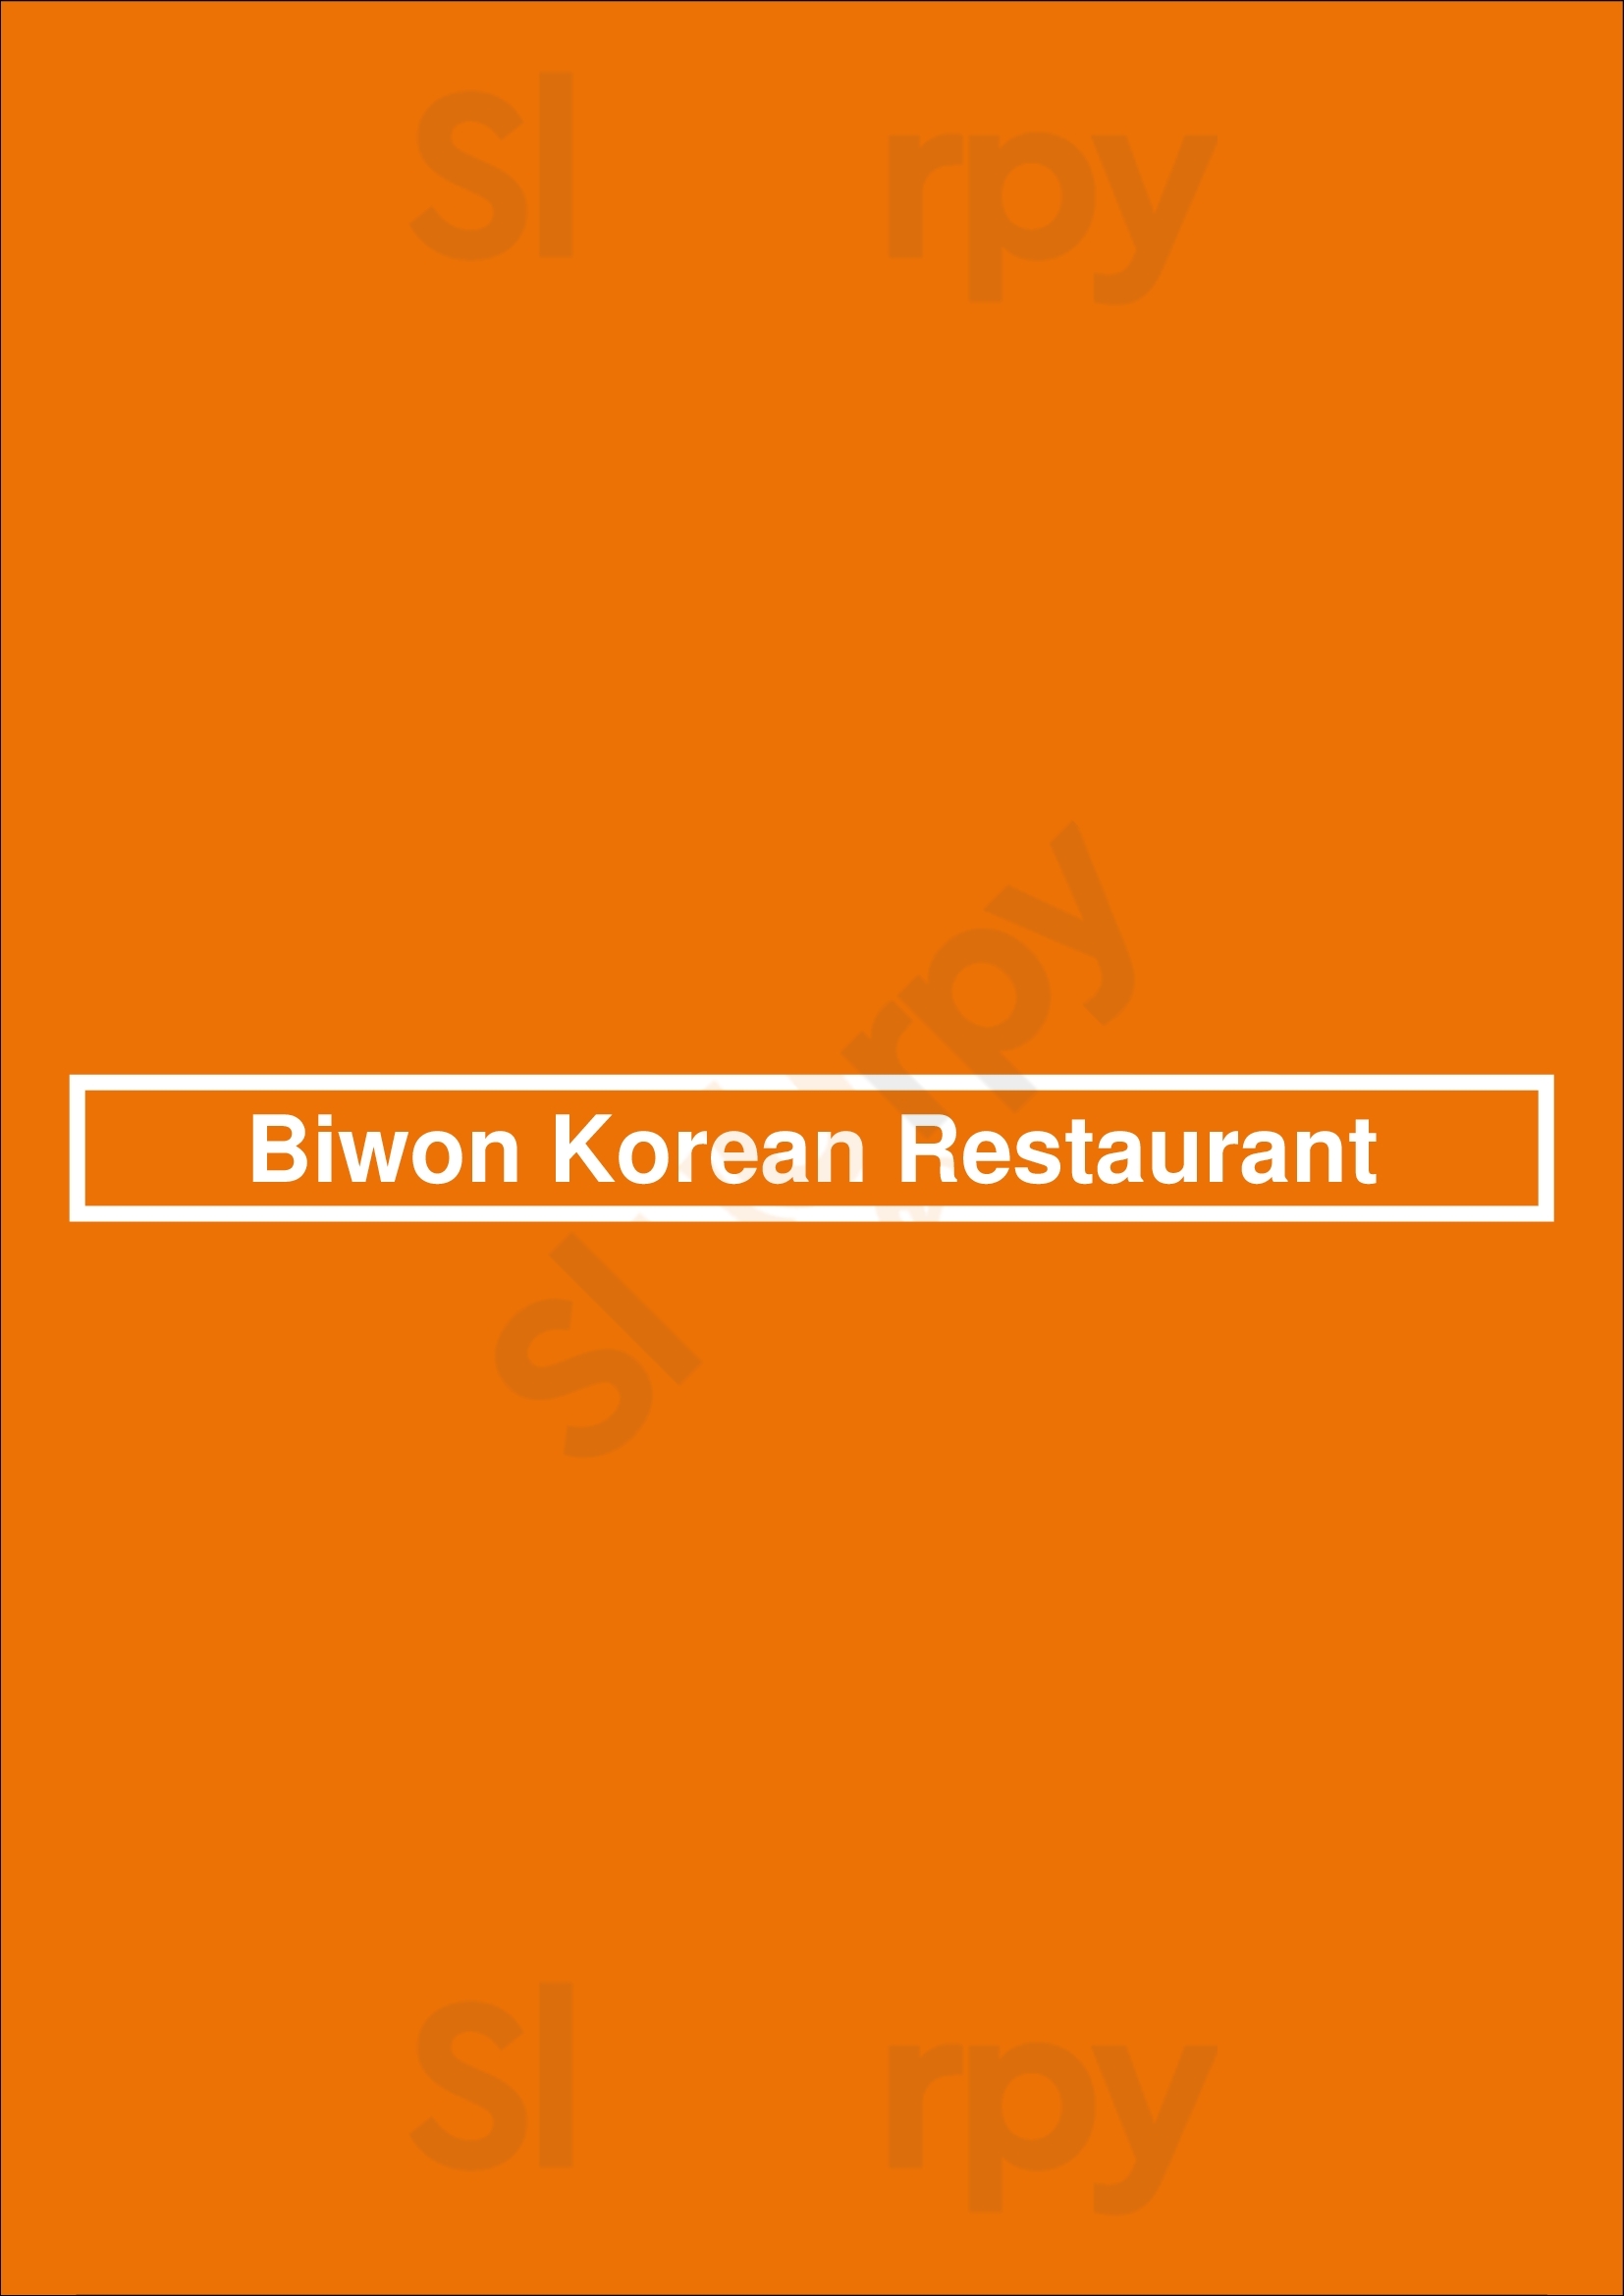 Biwon Korean Restaurant Toronto Menu - 1